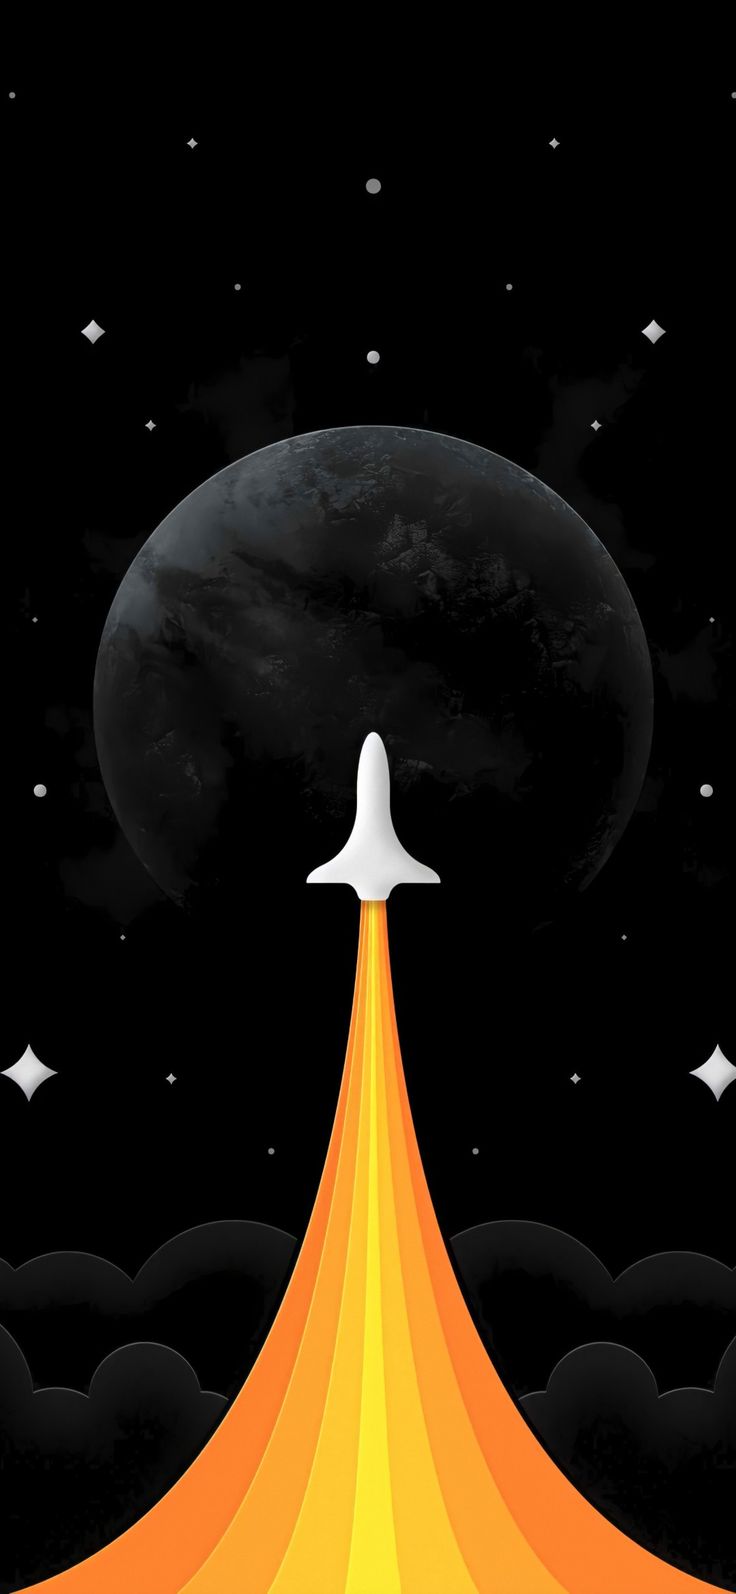 Minimal Rocket In Space Wallpapers